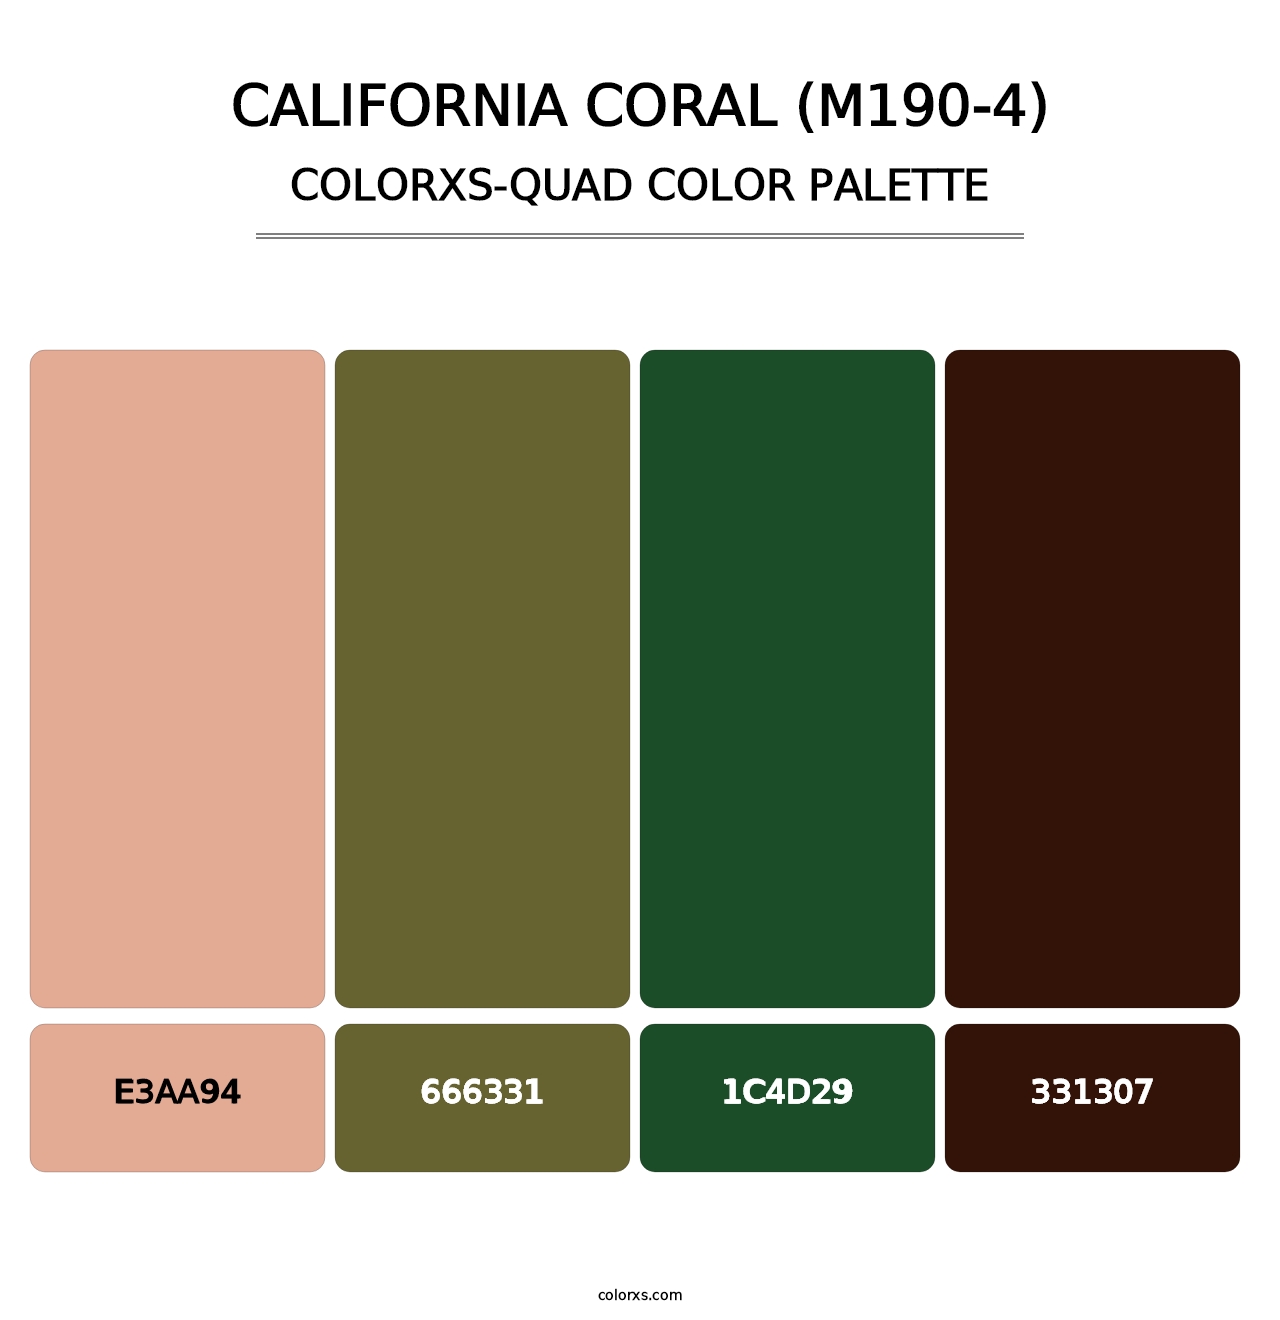 California Coral (M190-4) - Colorxs Quad Palette